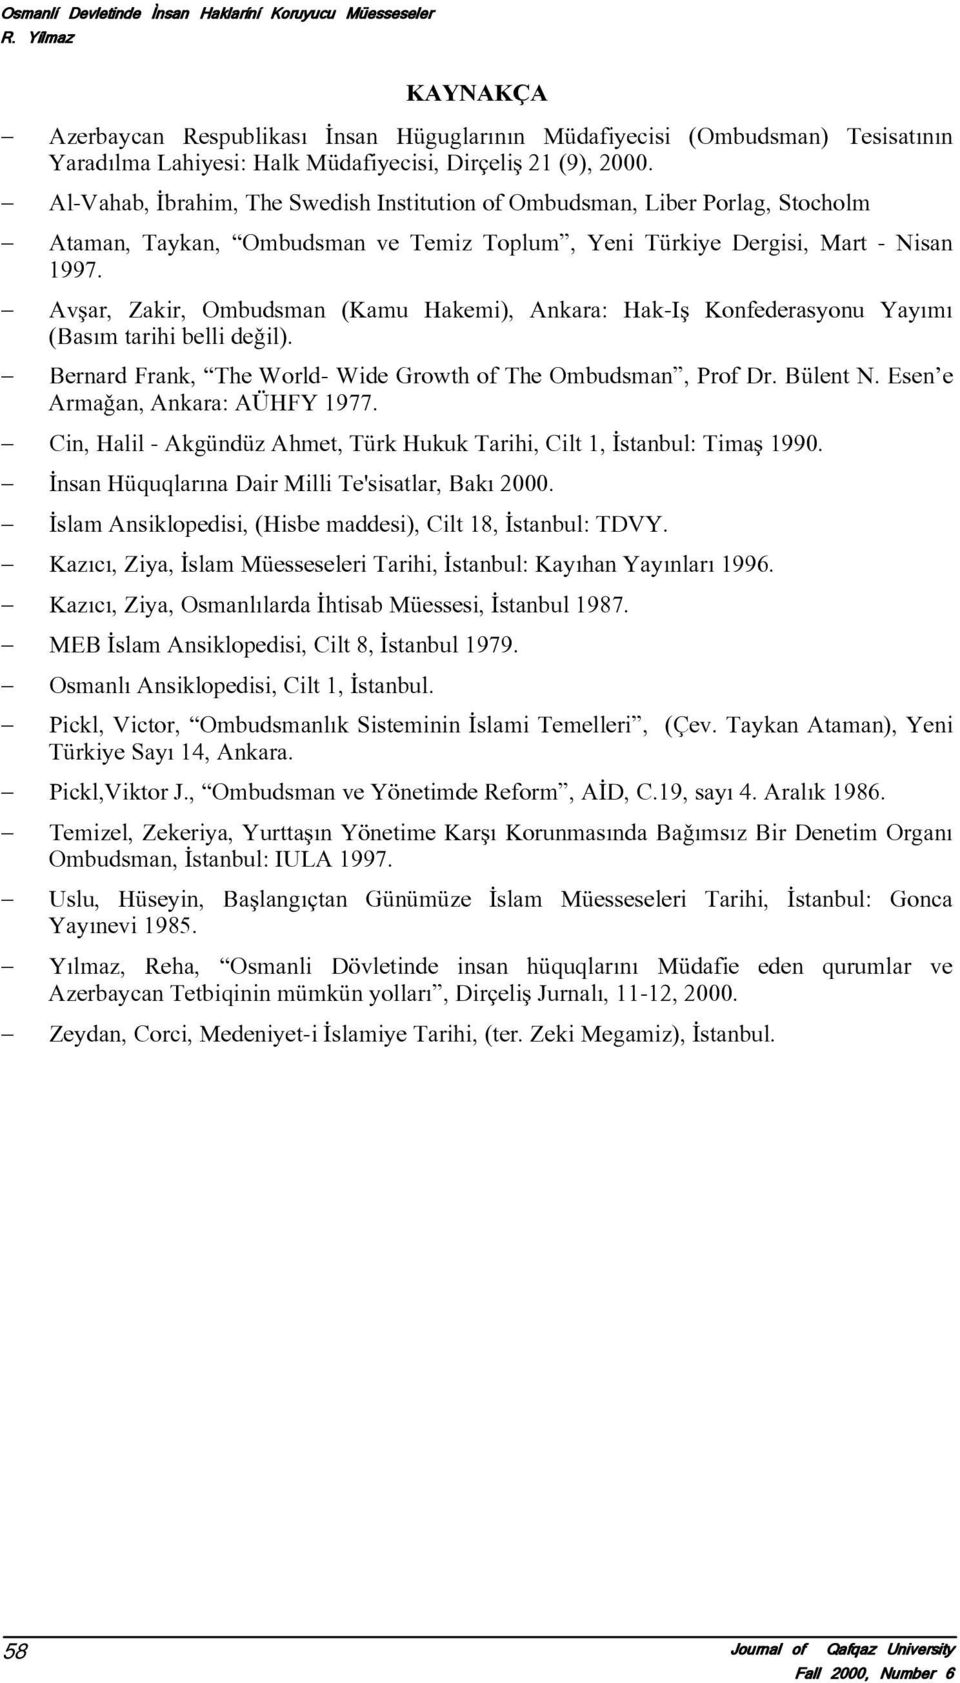 Al-Vahab, Ìbrahim, The Swedish Institution of Ombudsman, Liber Porlag, Stocholm Ataman, Taykan, Ombudsman ve Temiz Toplum, Yeni Türkiye Dergisi, Mart - Nisan 1997.